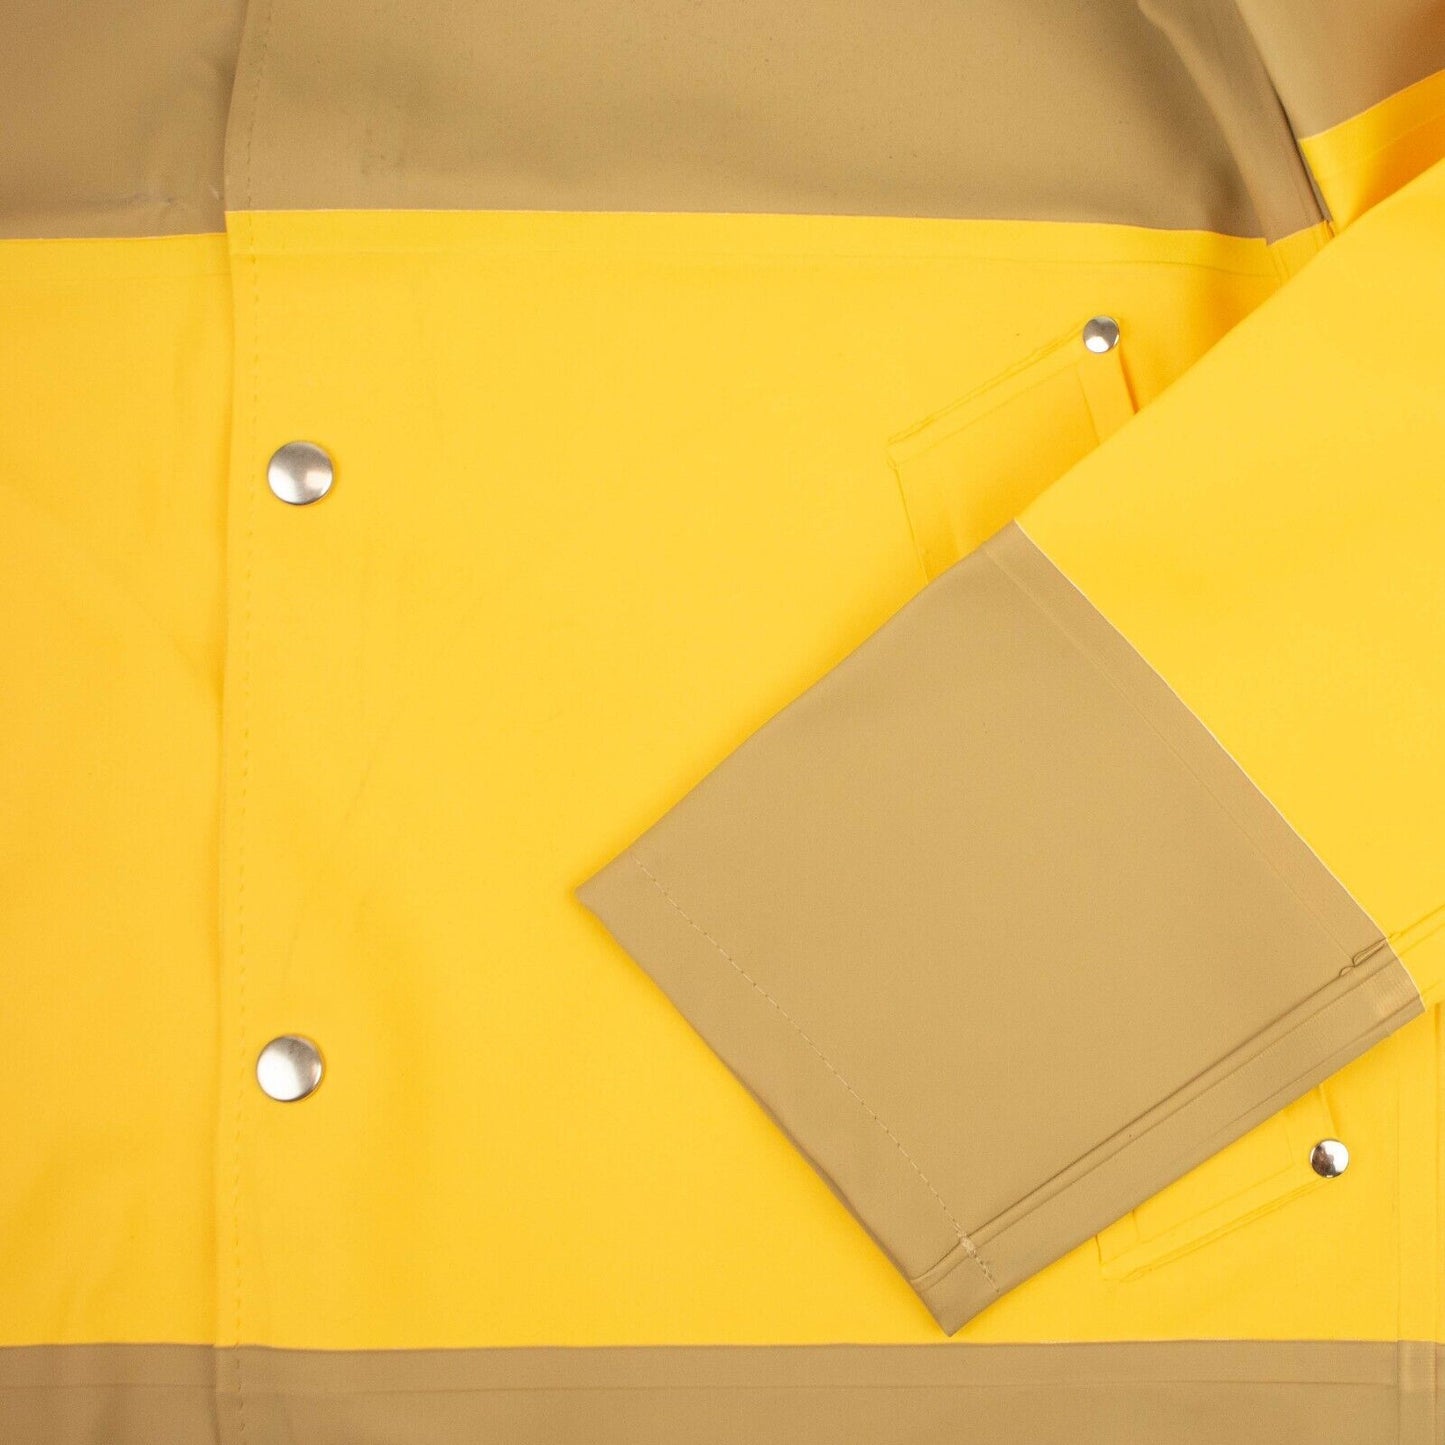 Stutterheim Stockholm Large Stripe Raincoat - Yellow/Sand